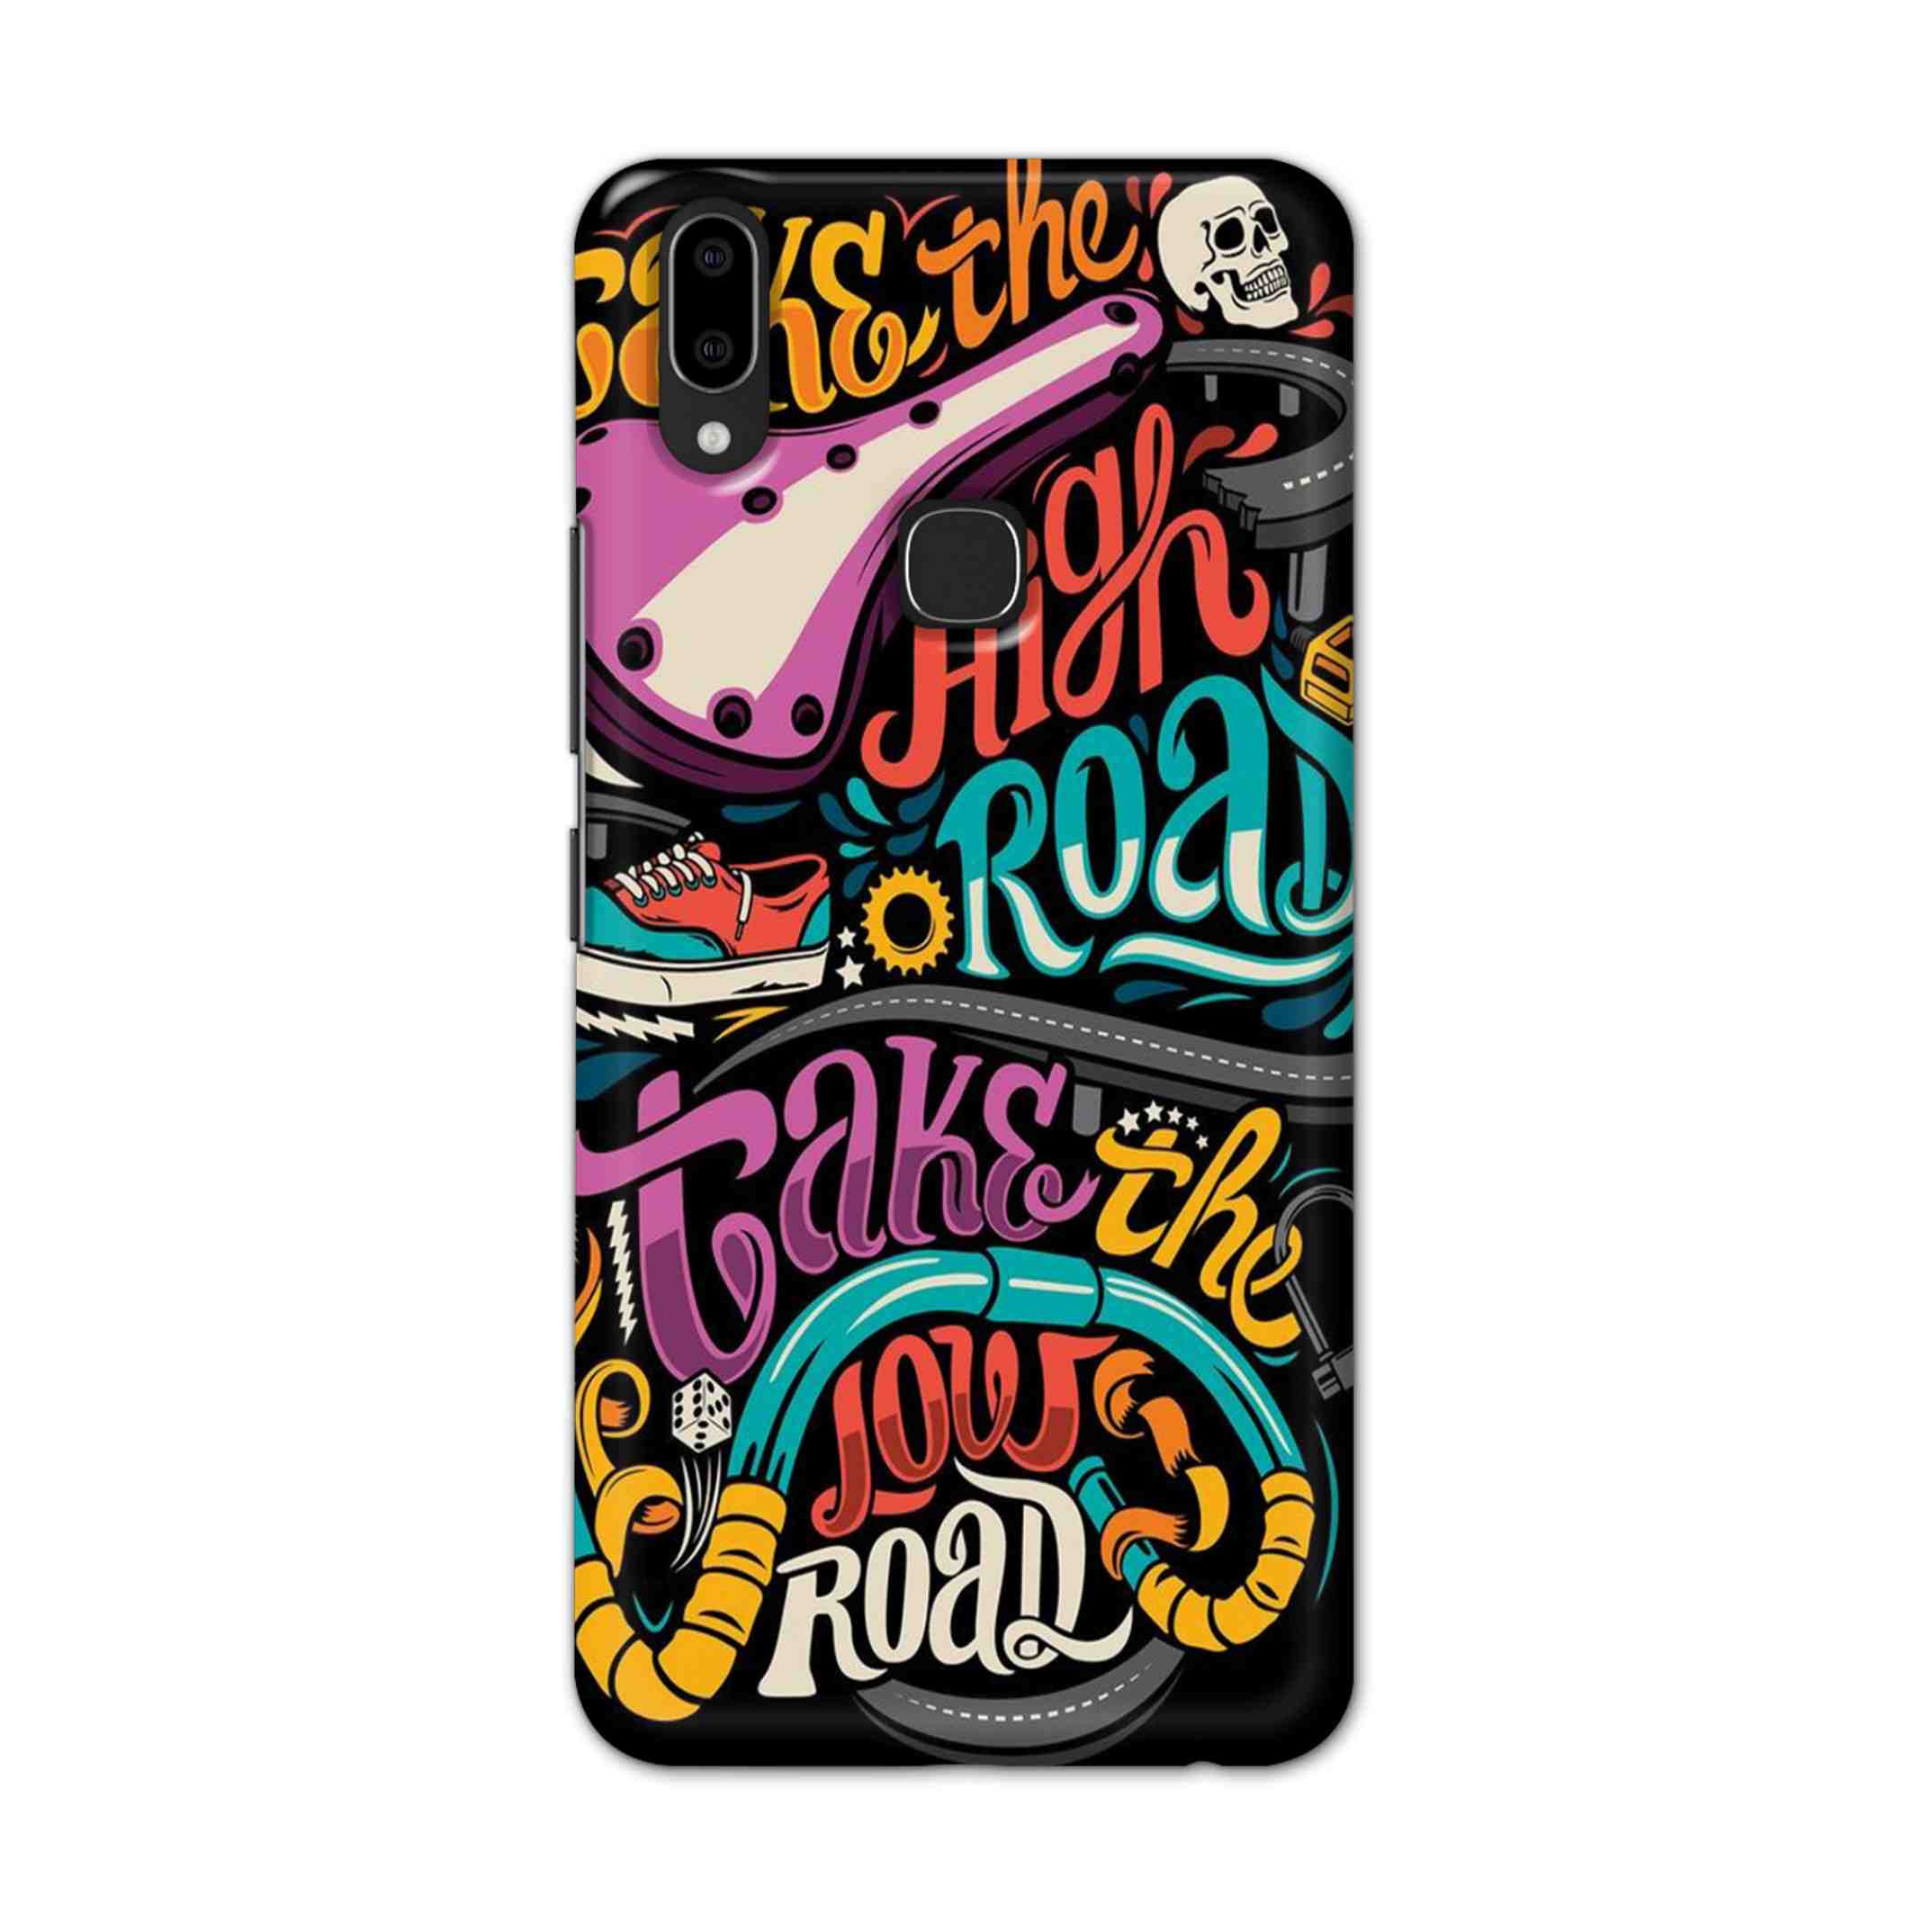 Buy Take The High Road Hard Back Mobile Phone Case Cover For Vivo V9 / V9 Youth Online